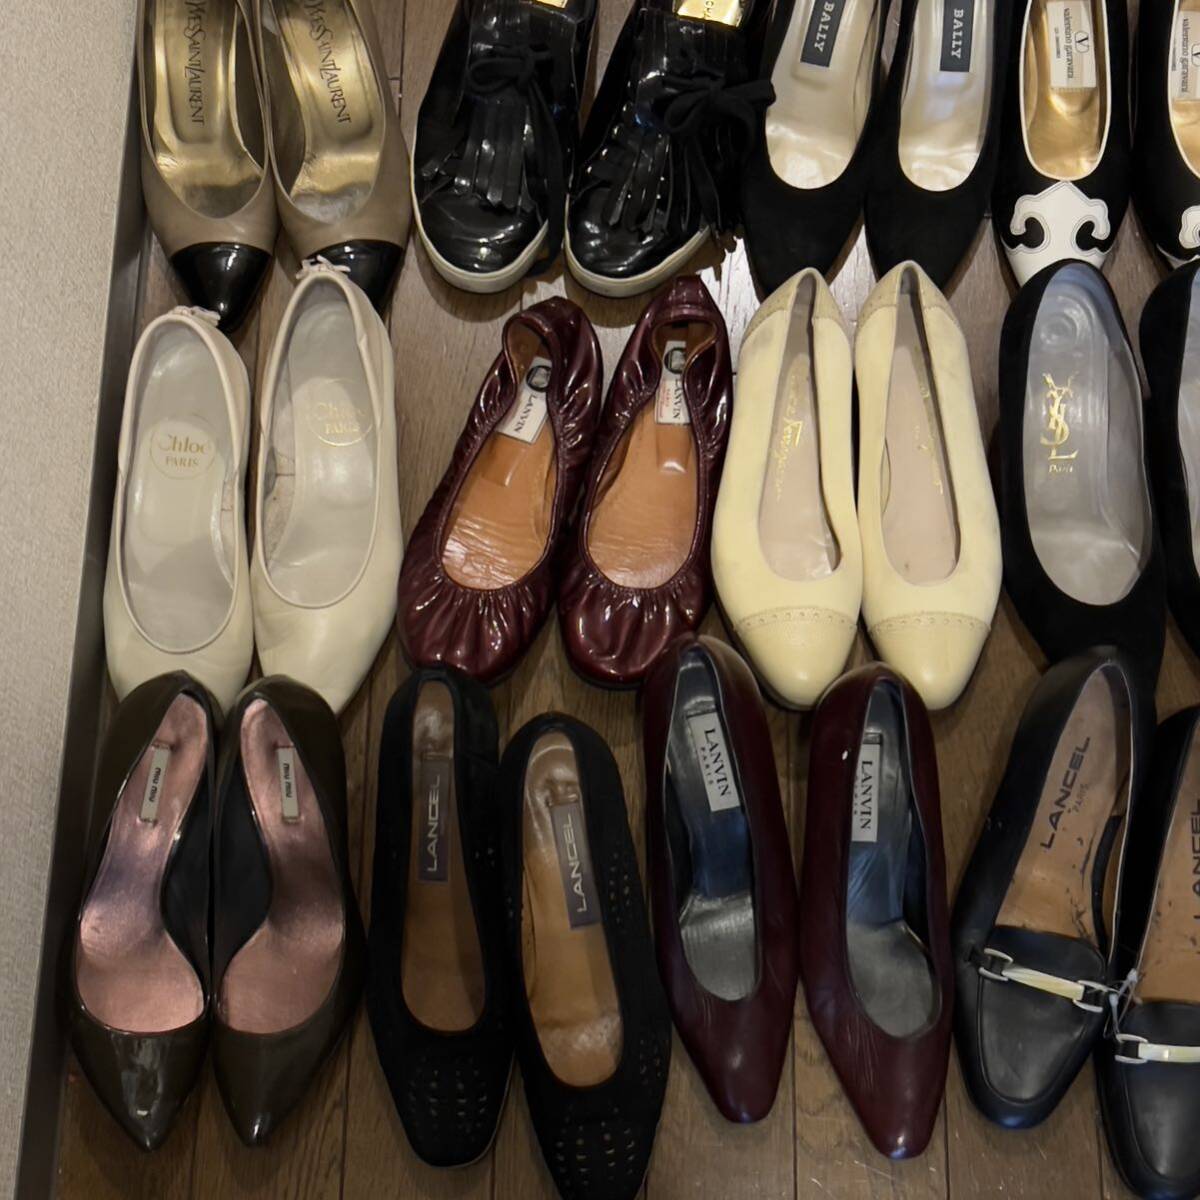 1 start set sale 30 pairs set brand shoes pumps sandals Ferragamo TORY BURCH MICHAEL KORS Chloe MIU MIU CELINE various Junk 